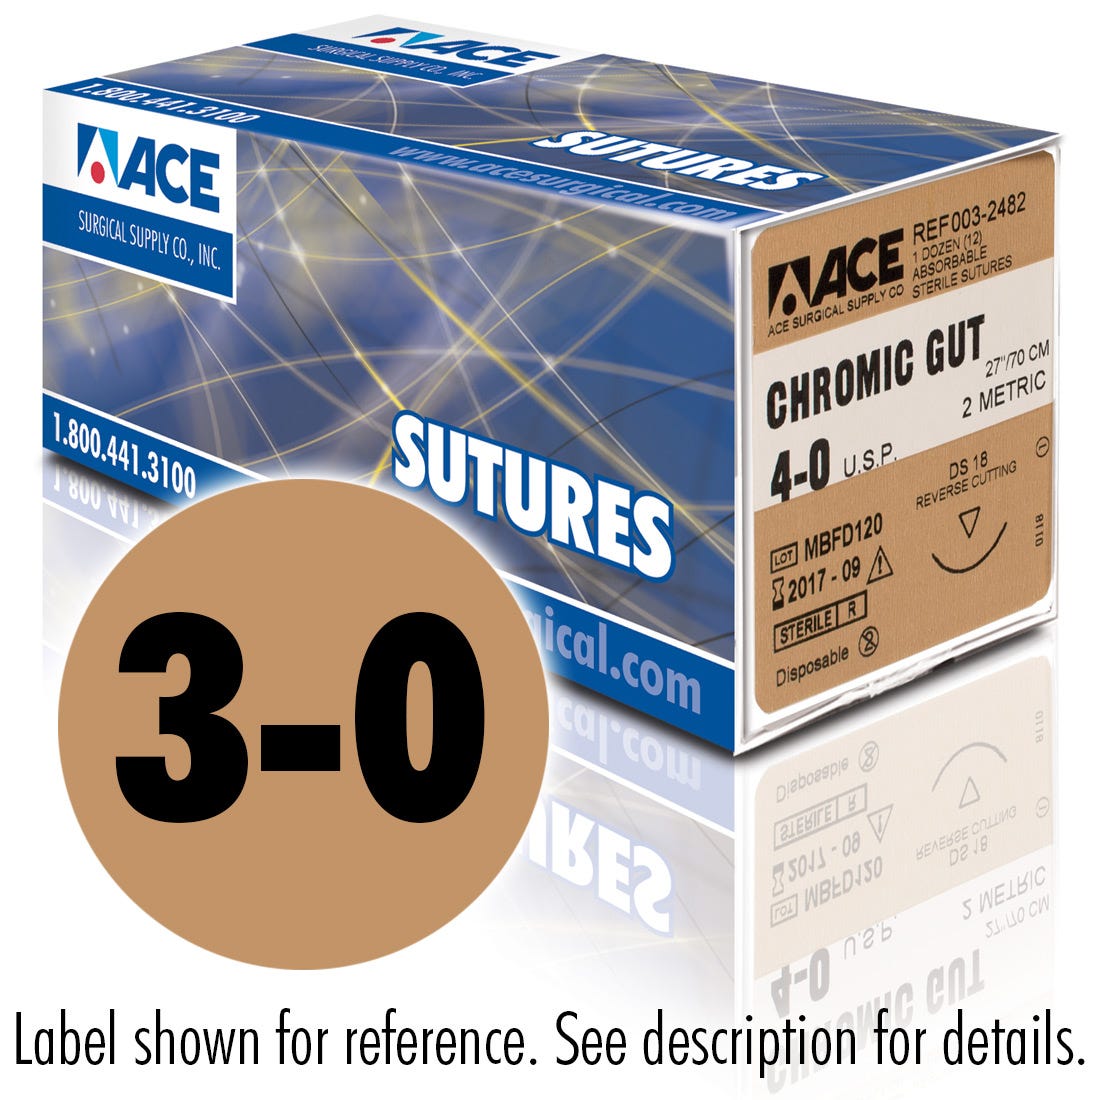 ACE 3-0 Chromic Gut Sutures, DS18, 27", 12/Box